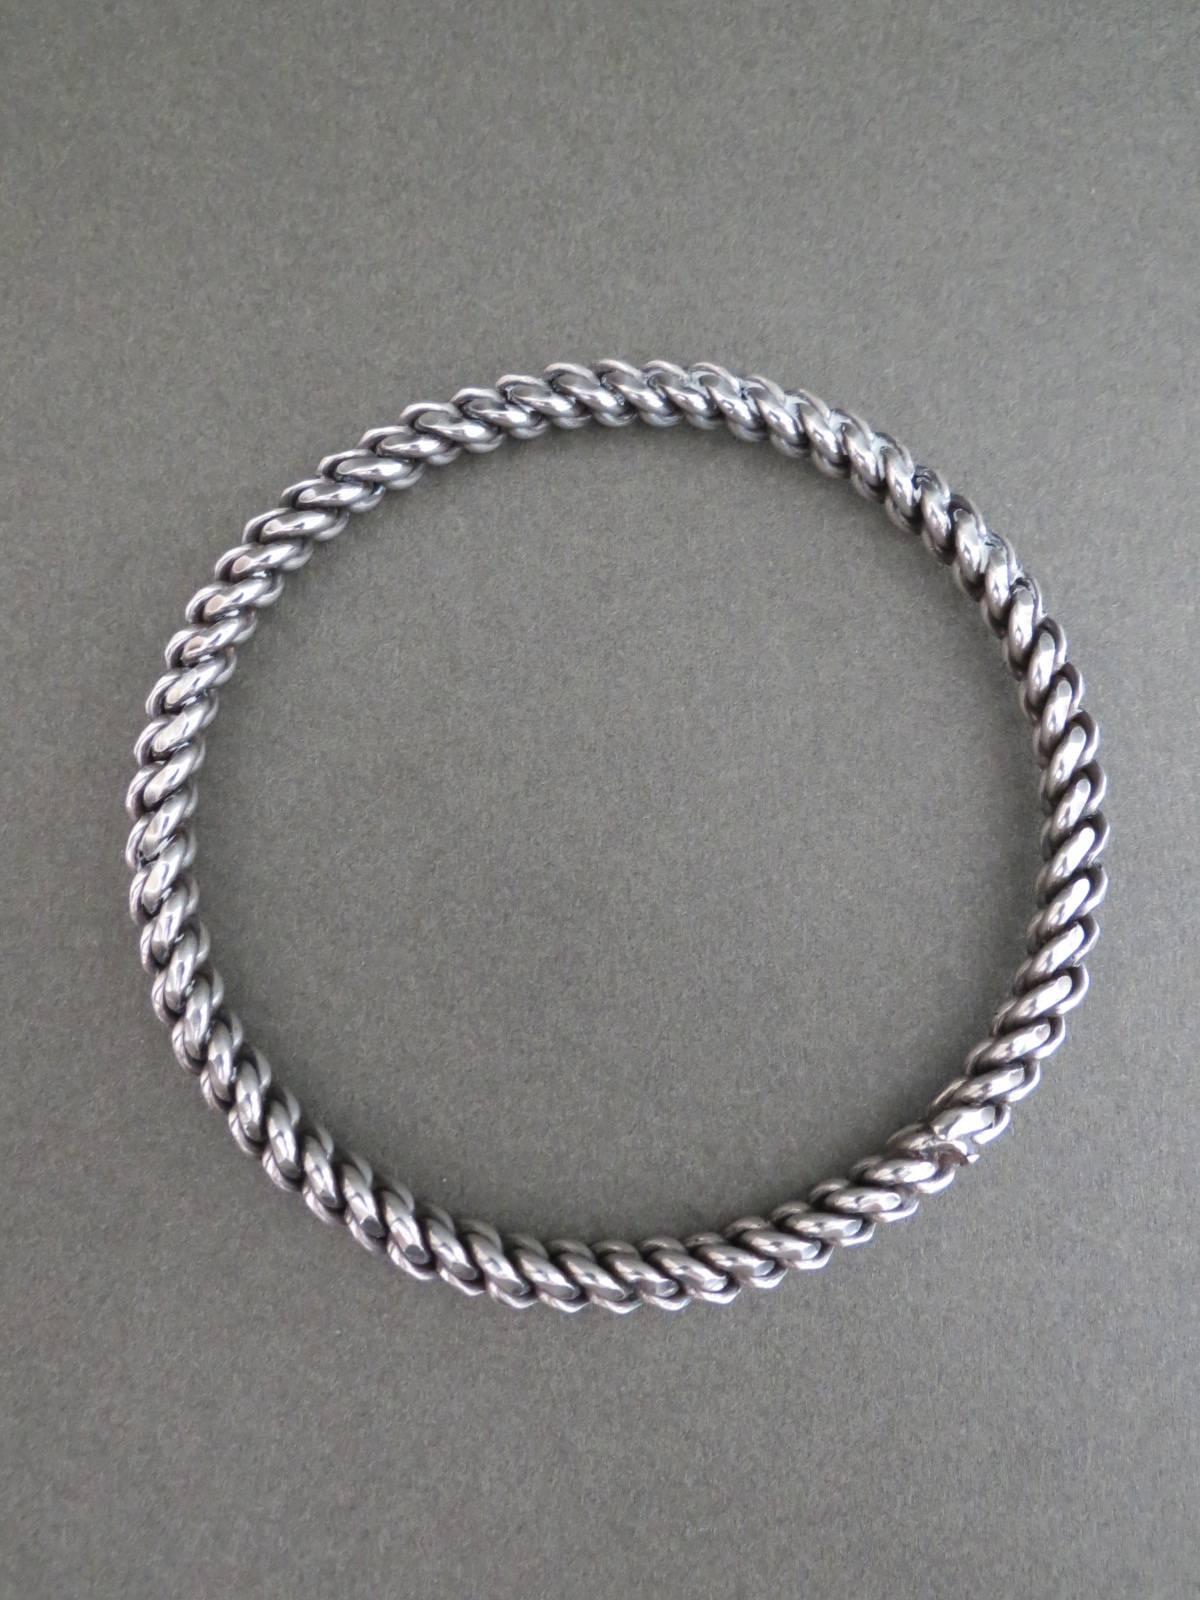 Vintage Danish Solid 925 Sterling Silver Rope Bracelet.
Item Specifics
Width: 0.5cm (approx 0.00